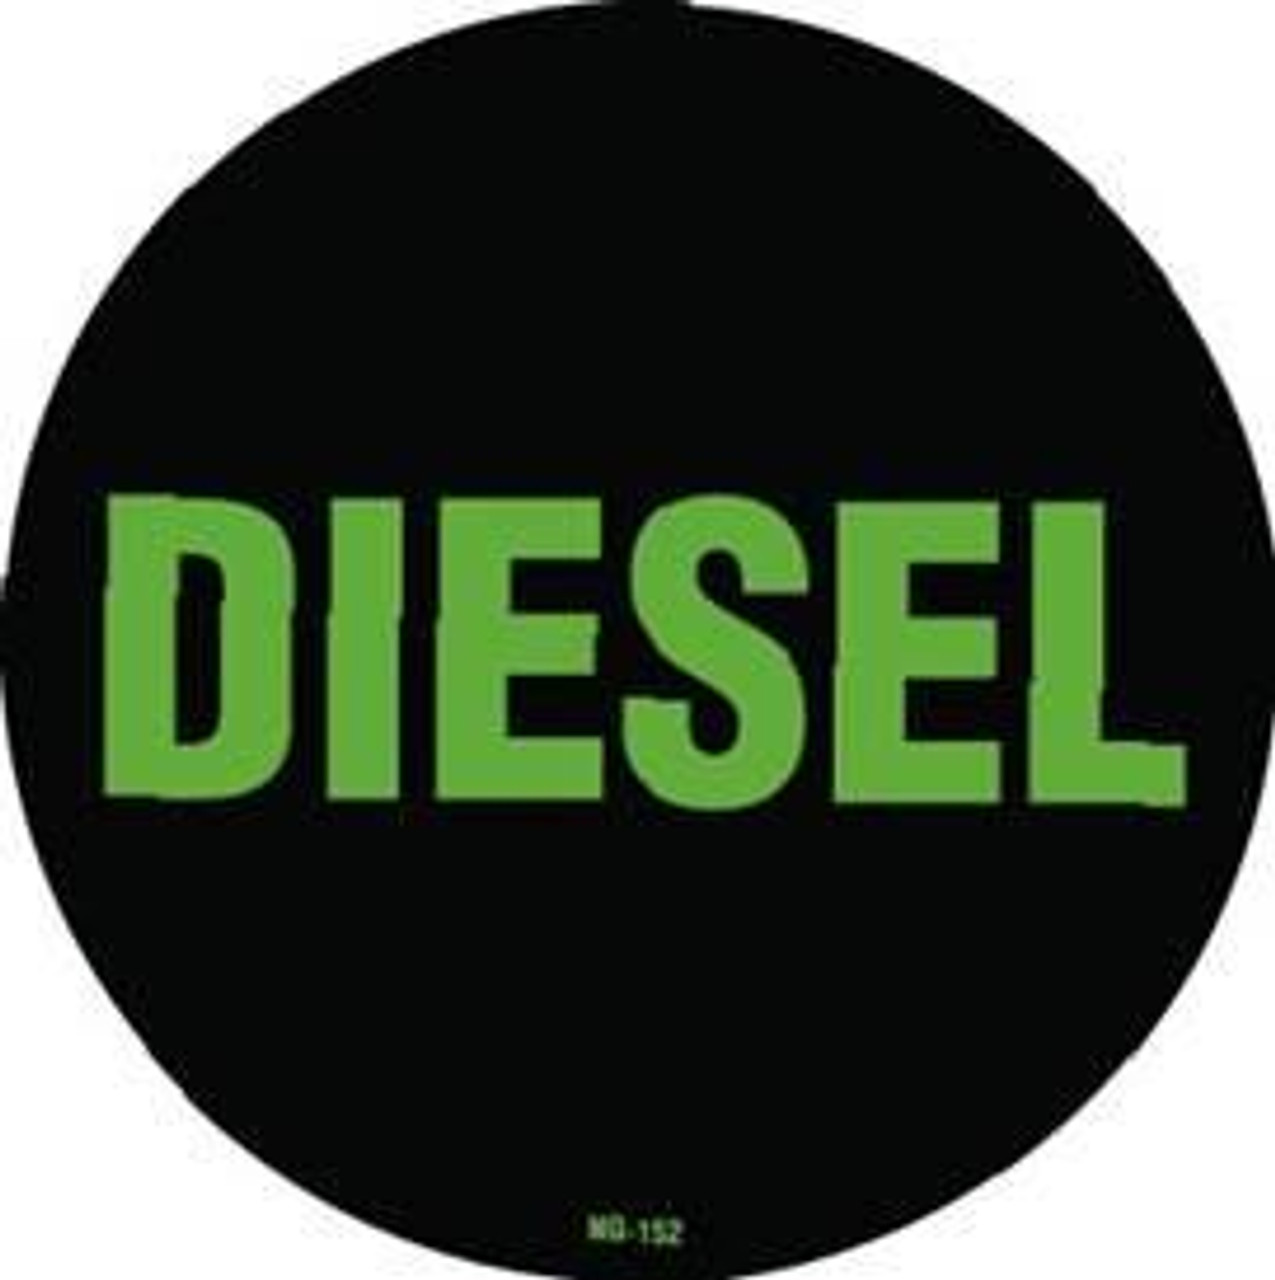 PID-1114 - Diesel Small Decal 5" Circle